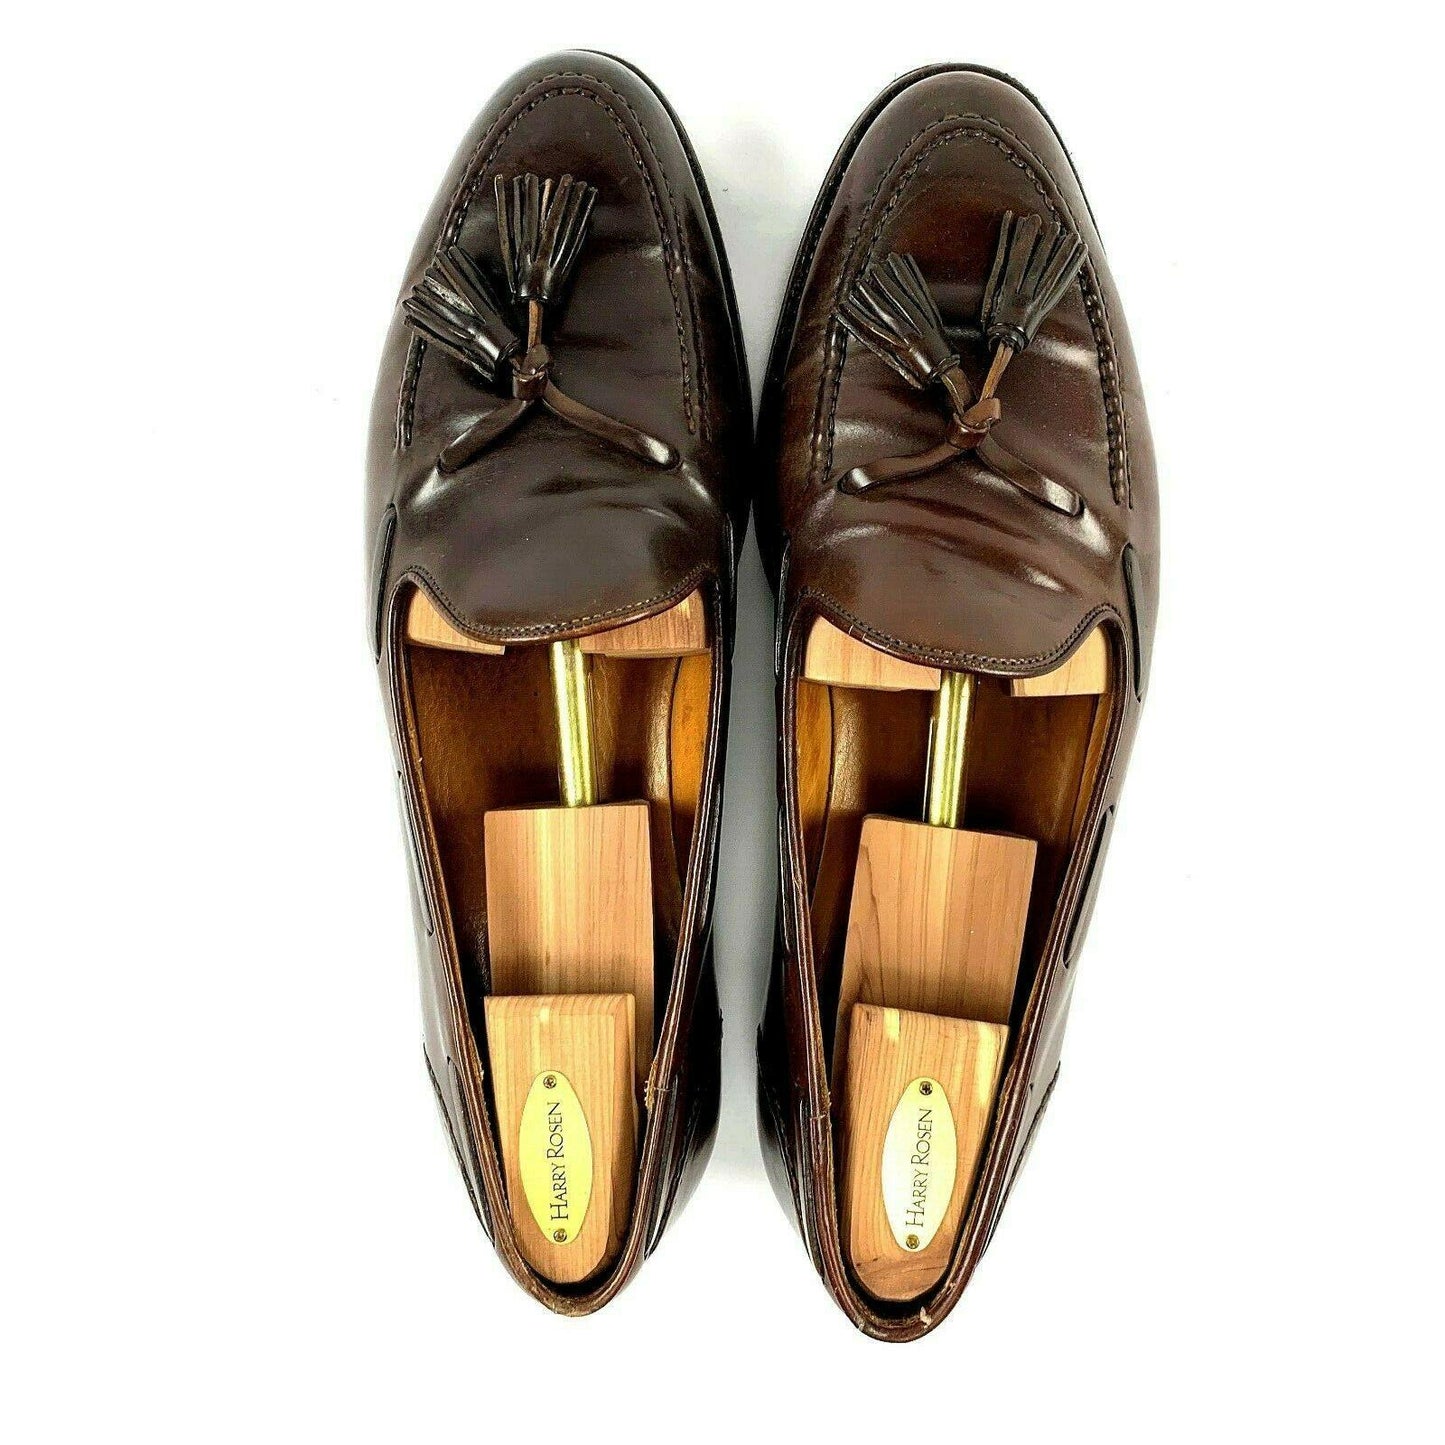 Crockett & Jones x Polo Ralph Lauren Brown Shell Cordovan Tassel Loafer Dress Shoe 11.5 D US - Genuine Design Luxury Consignment